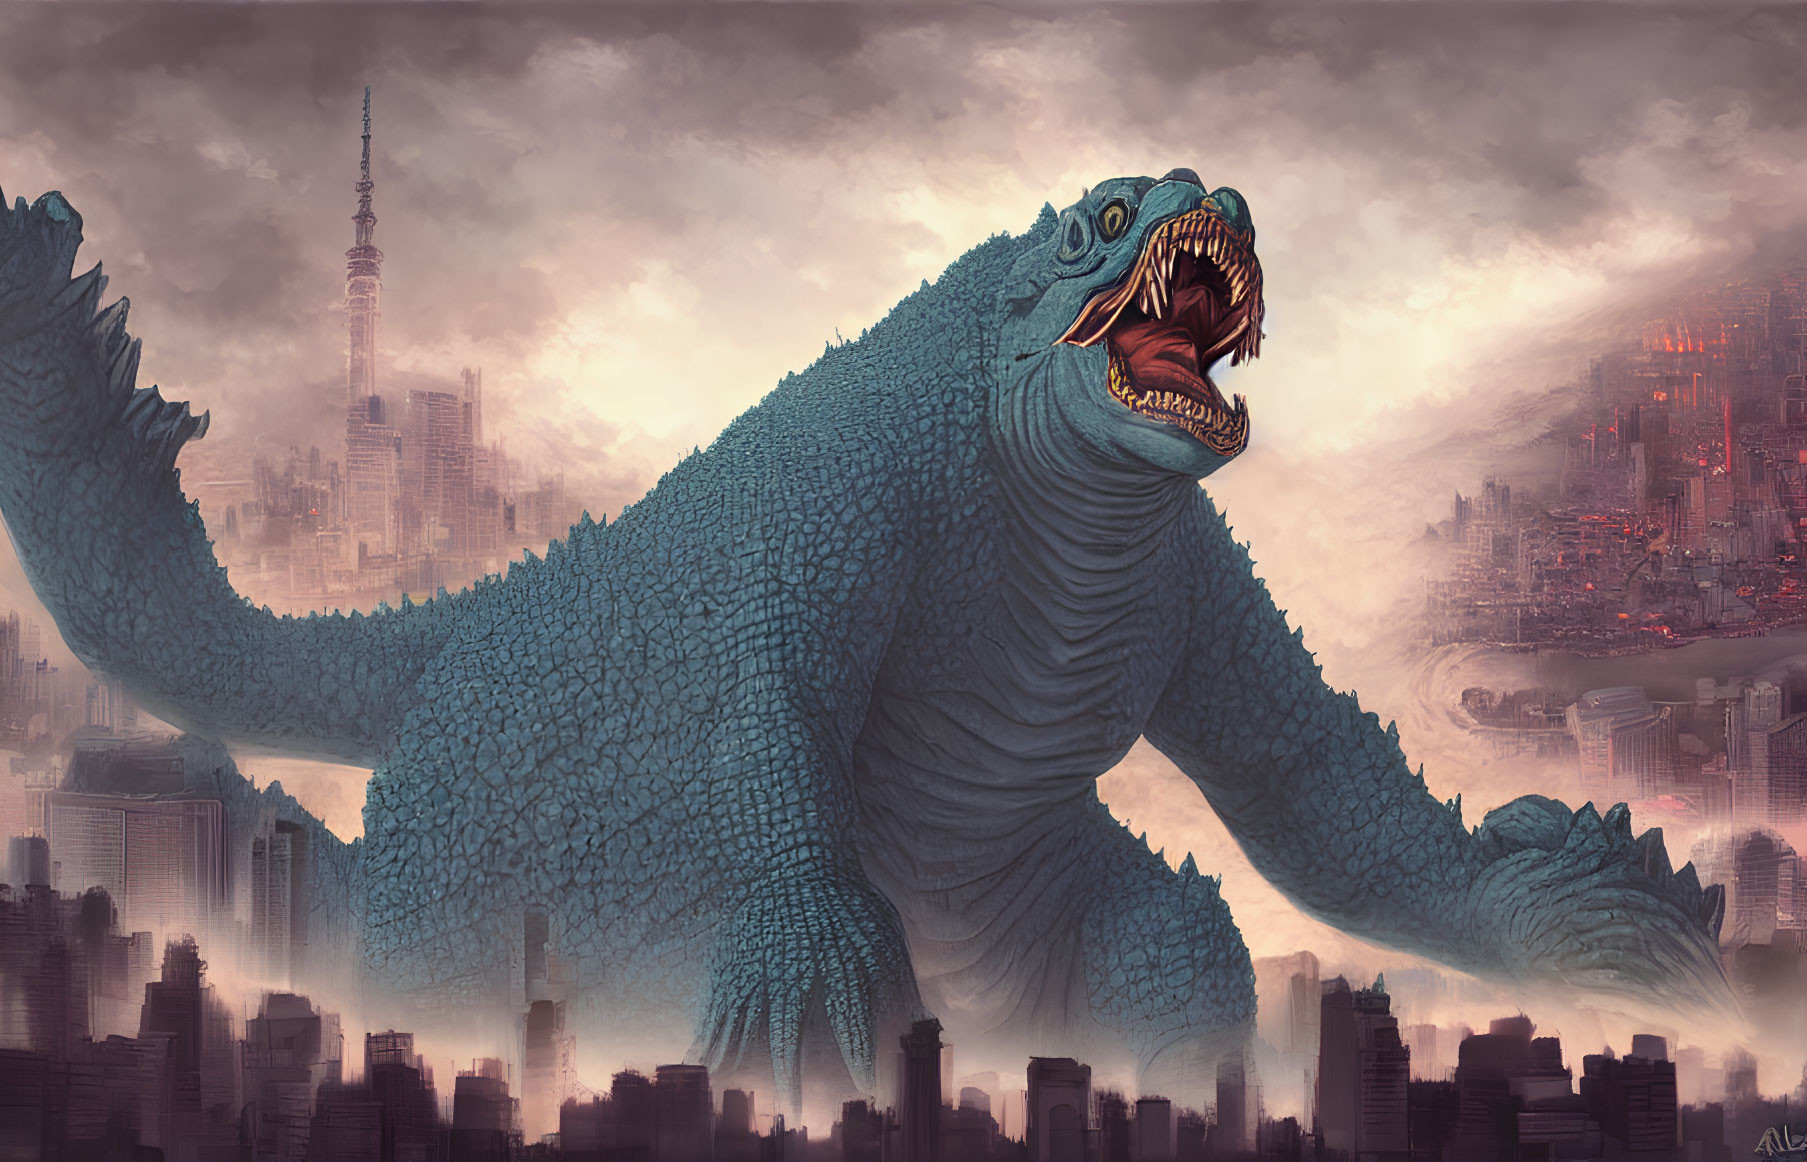 Enormous blue reptilian monster roaring over cityscape